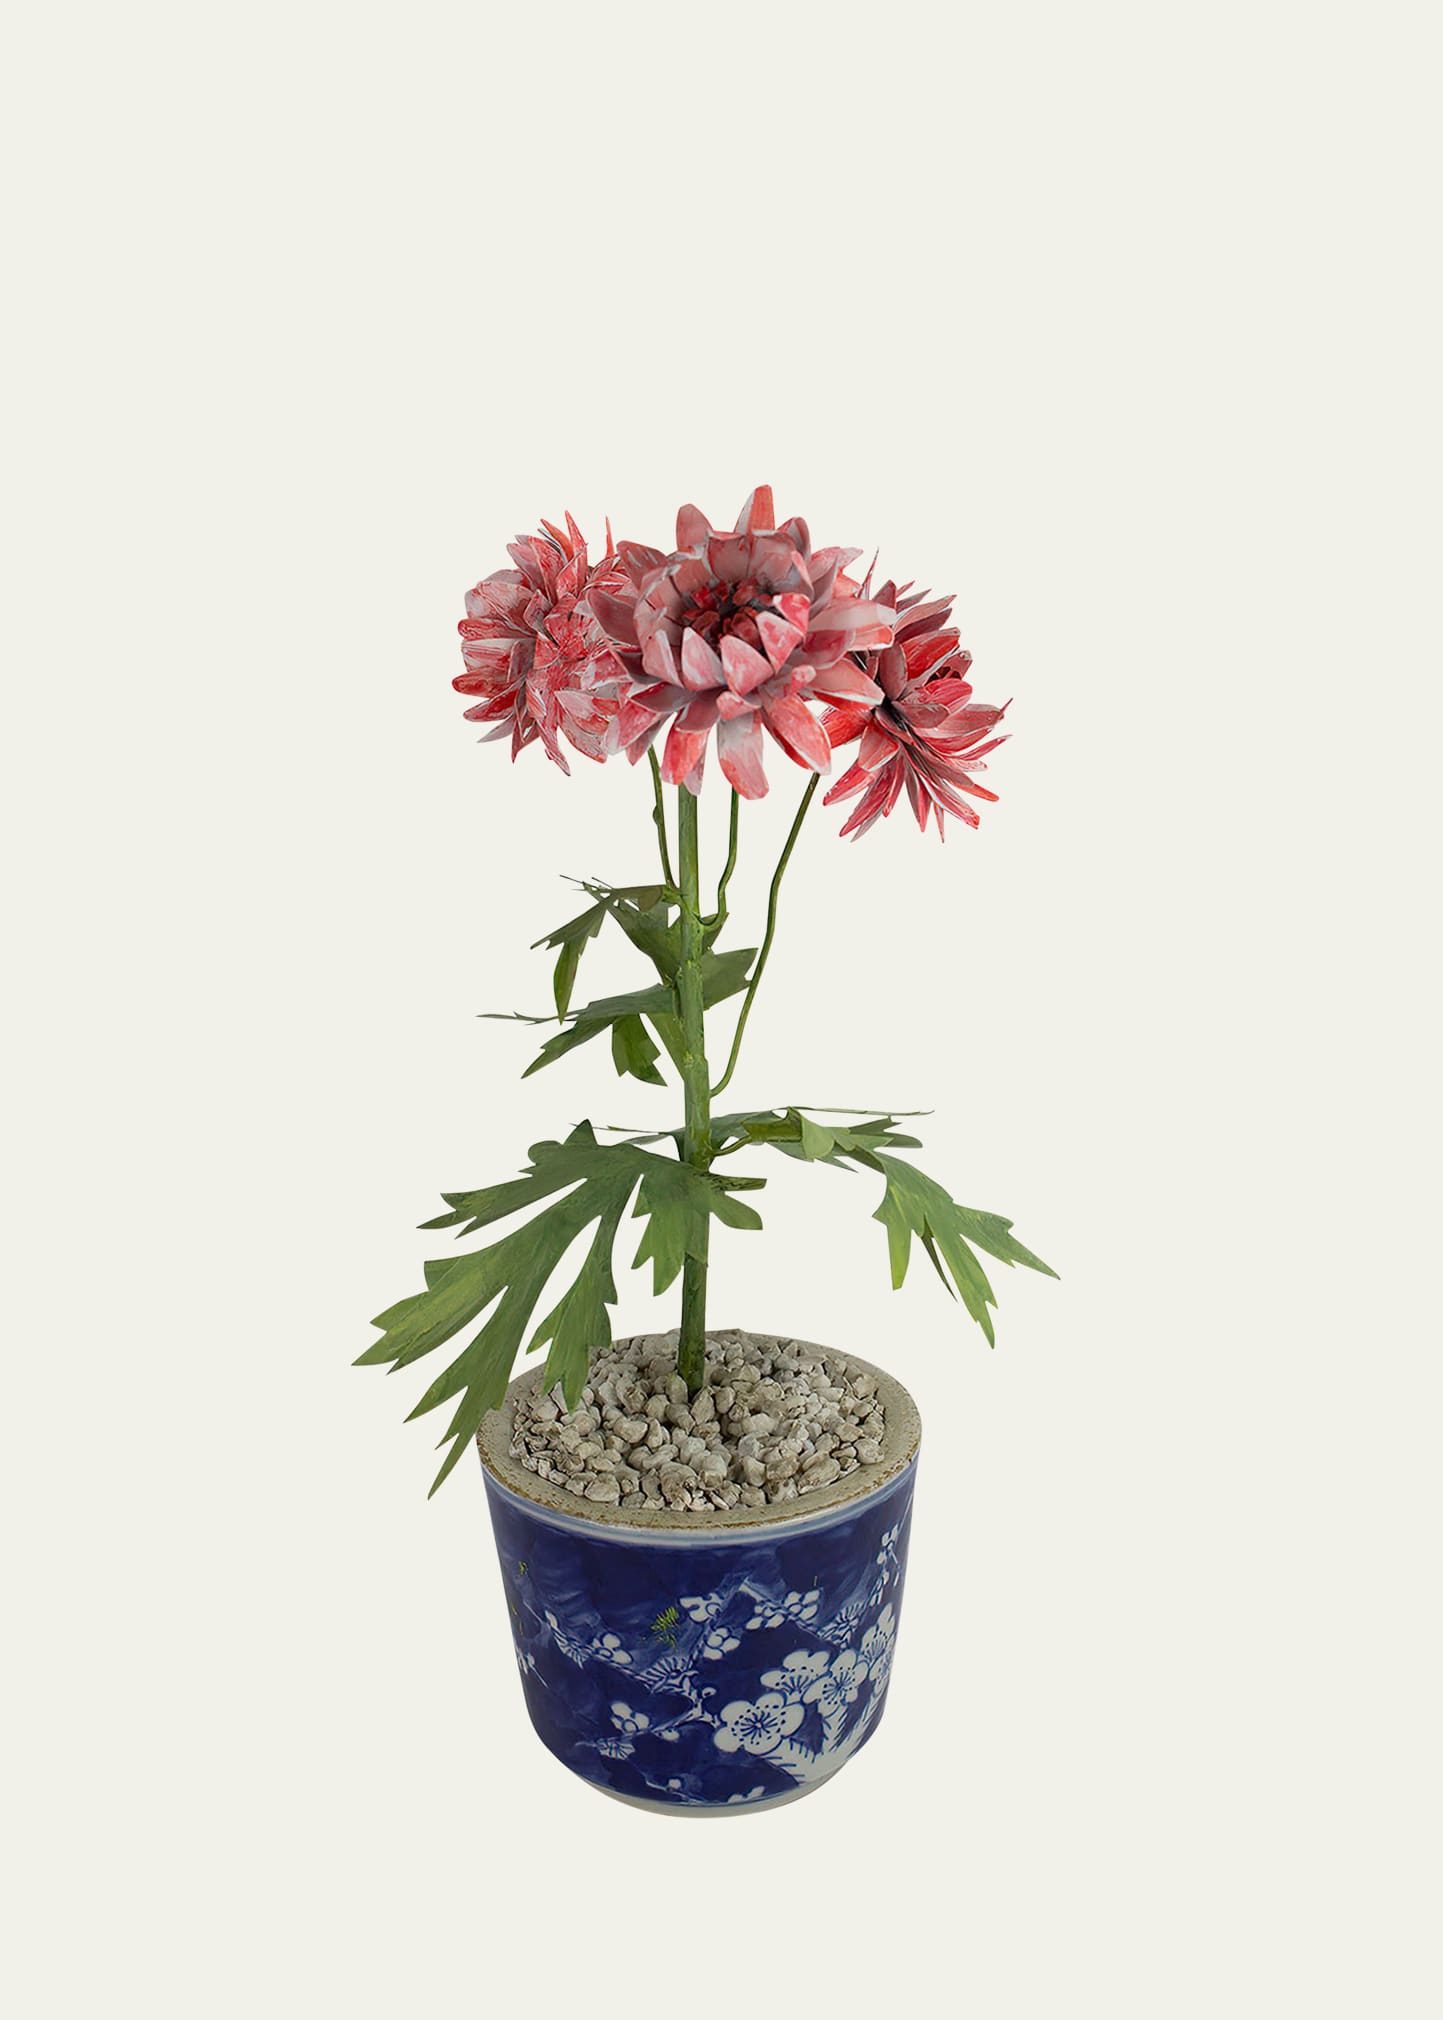 Crysanthemum November Birth Flower in White Terracotta Pot